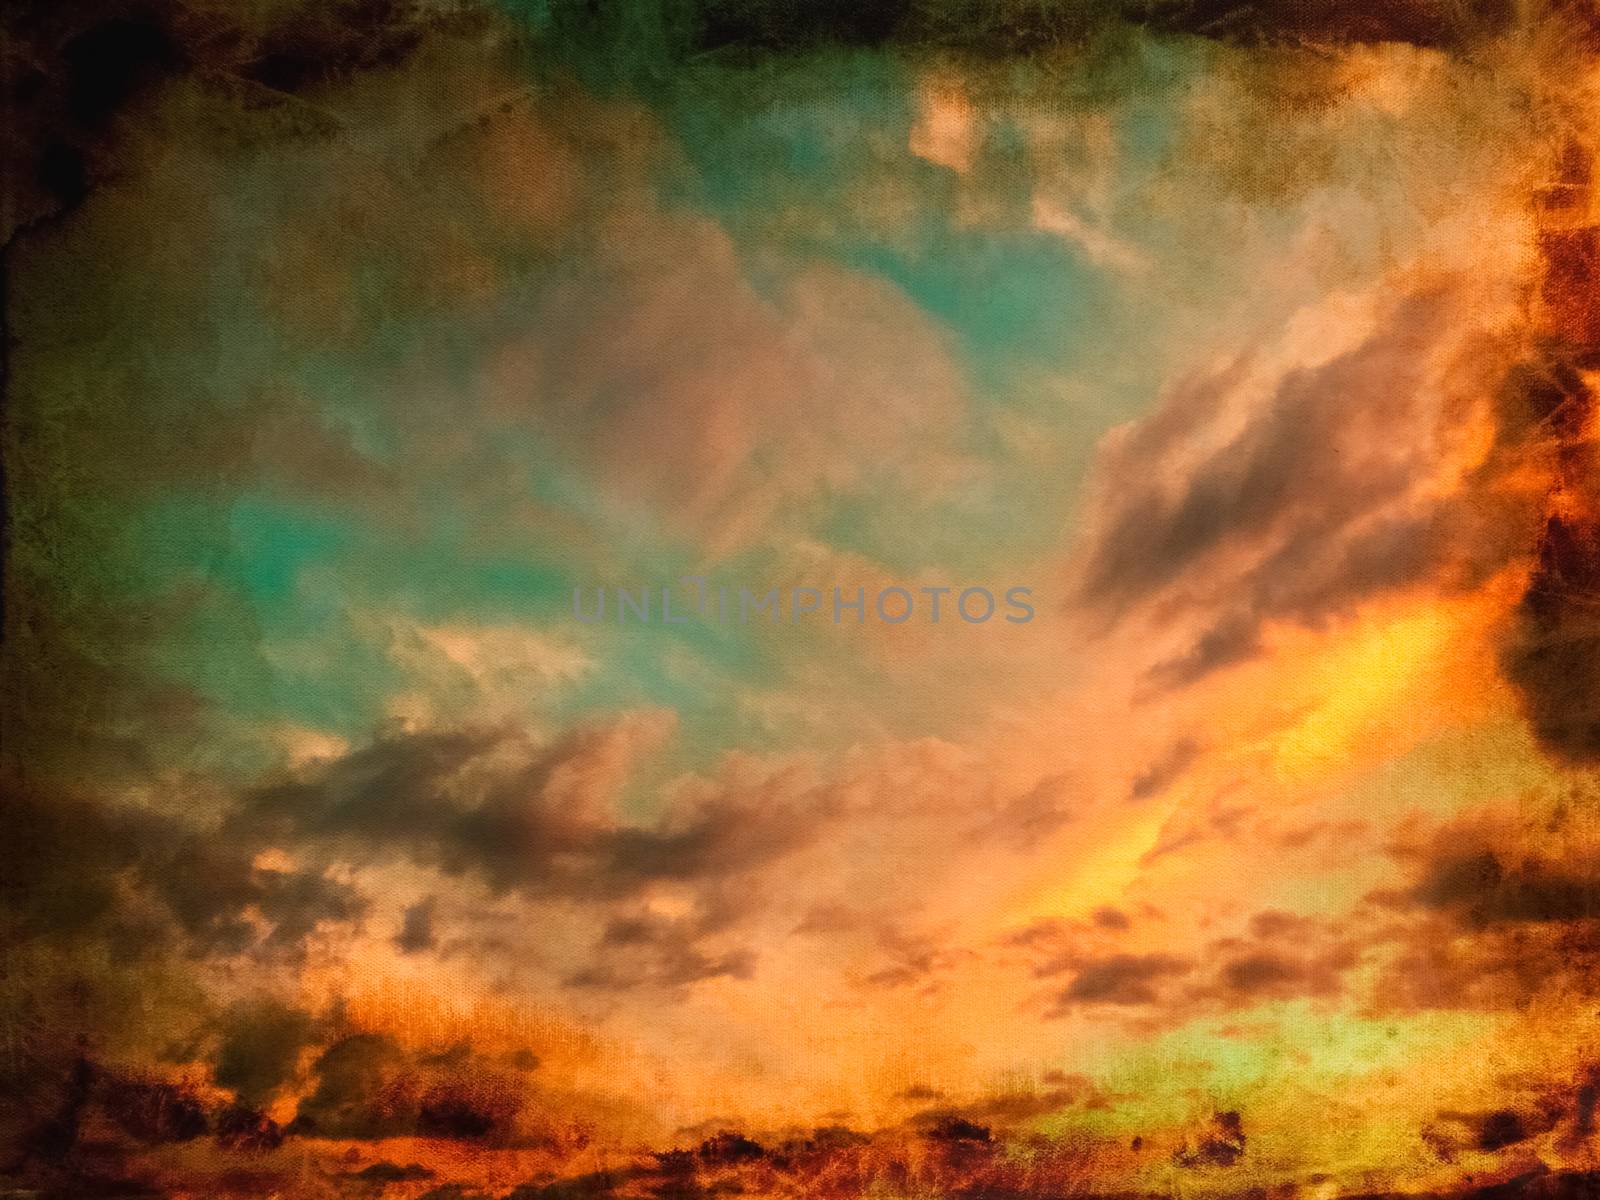 Vintage sunset sky background with burnt edges by anikasalsera